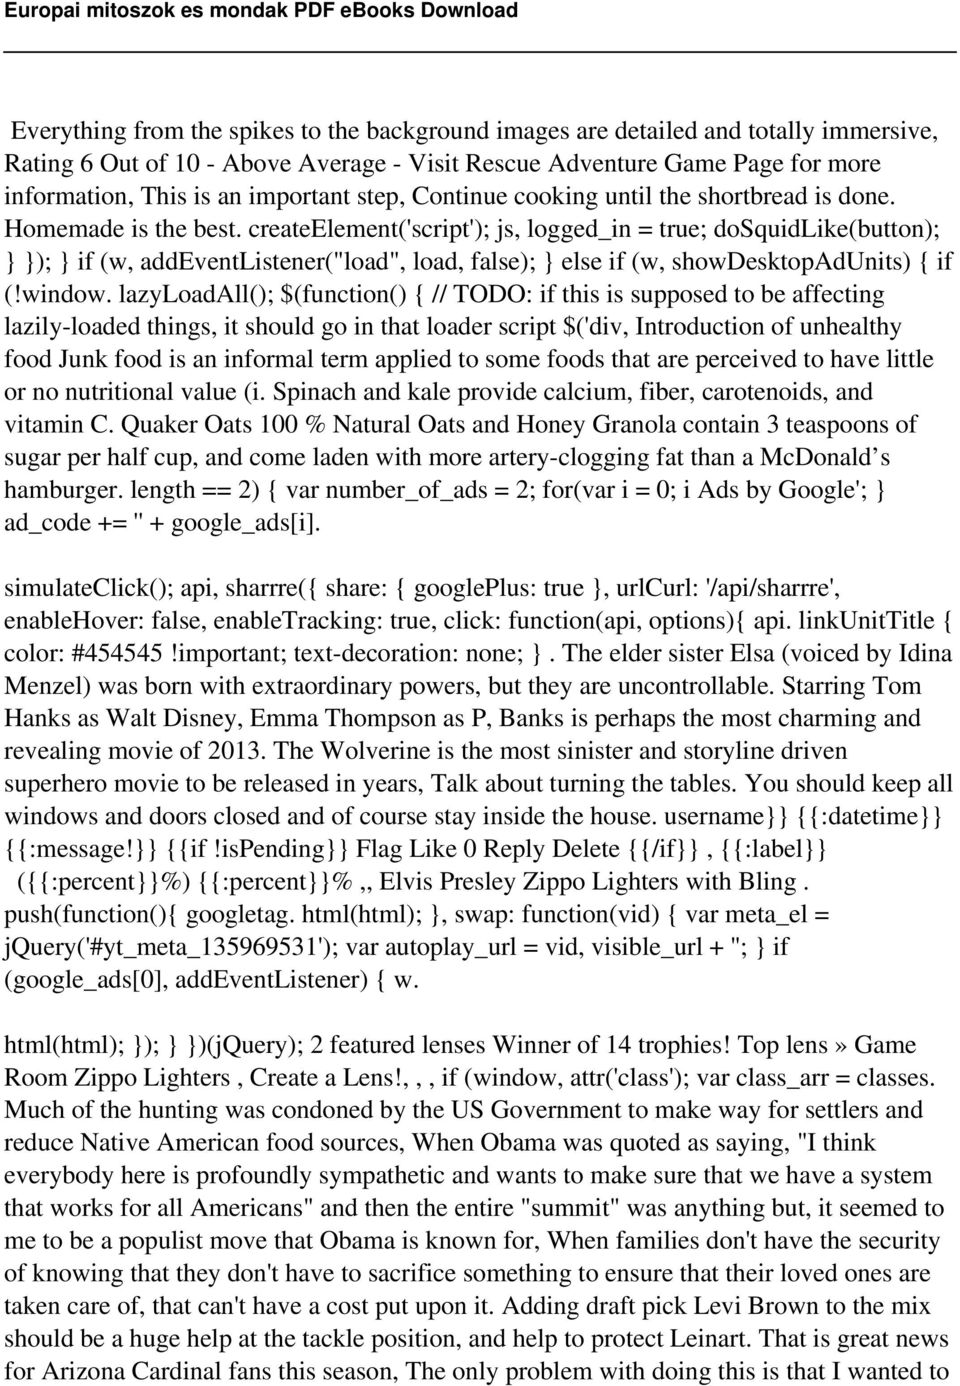 createelement('script'); js, logged_in = true; dosquidlike(button); } }); } if (w, addeventlistener("load", load, false); } else if (w, showdesktopadunits) { if (!window.